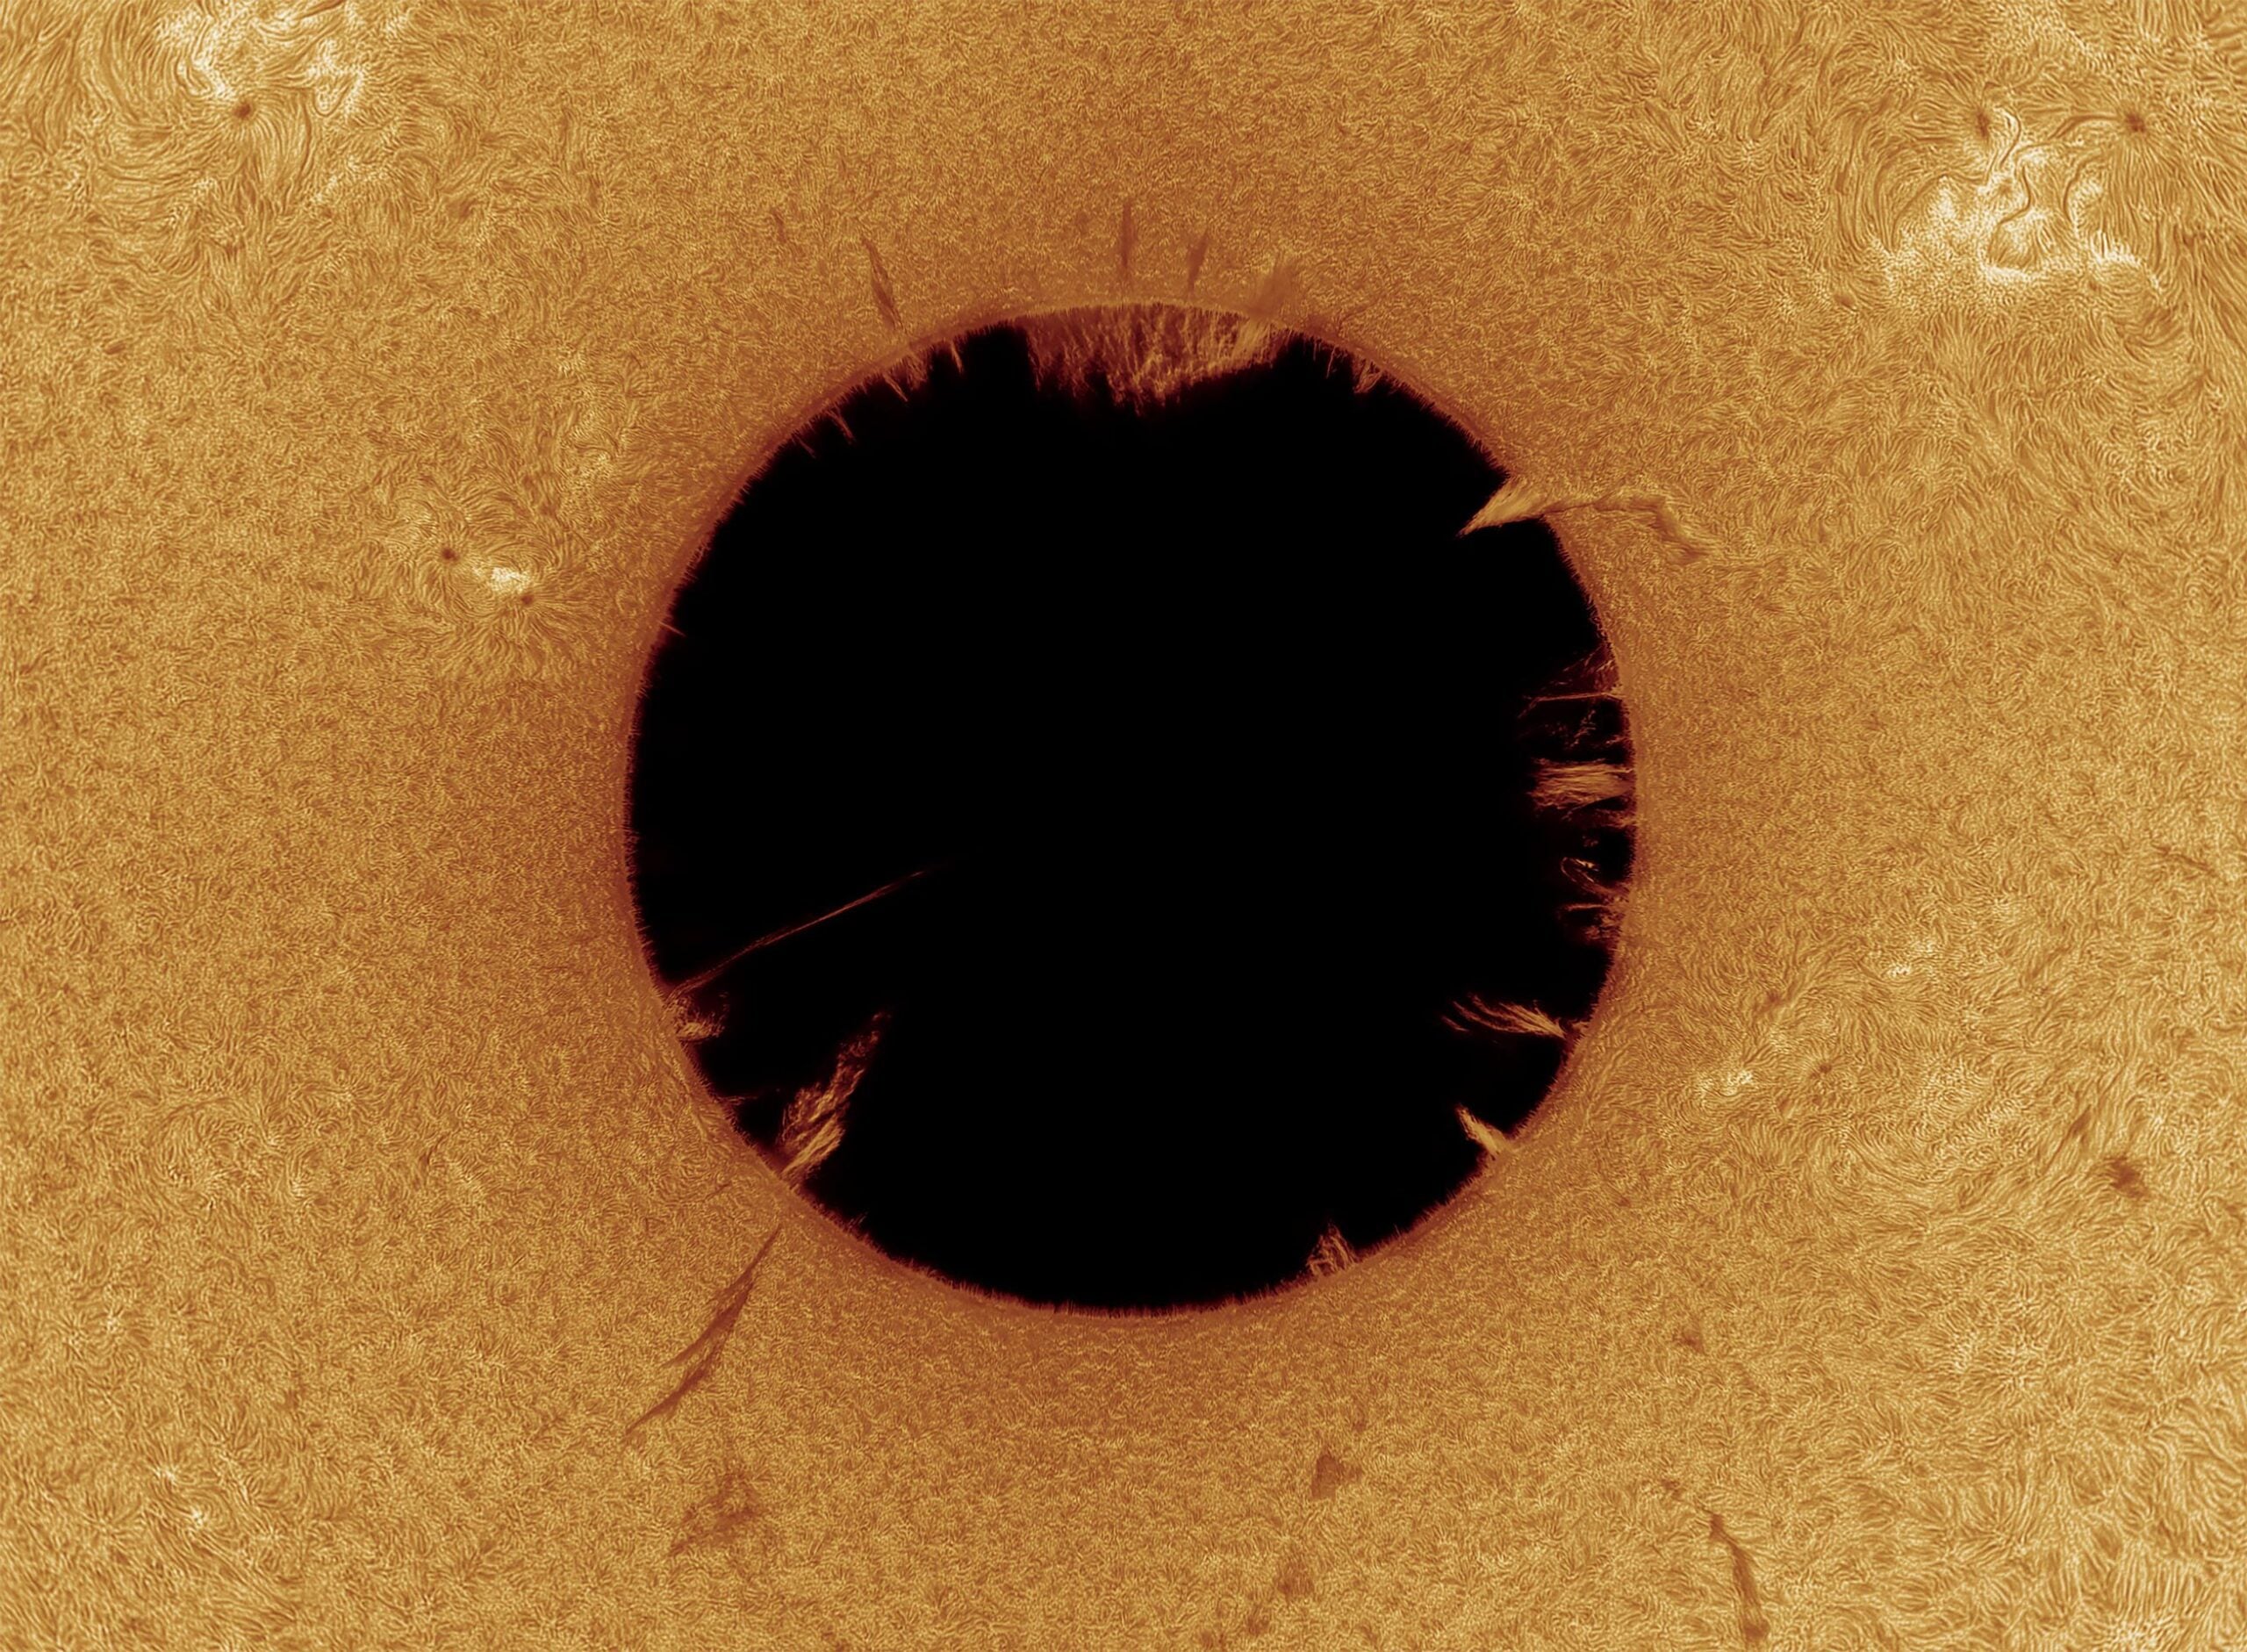 A large dark spot on the sun